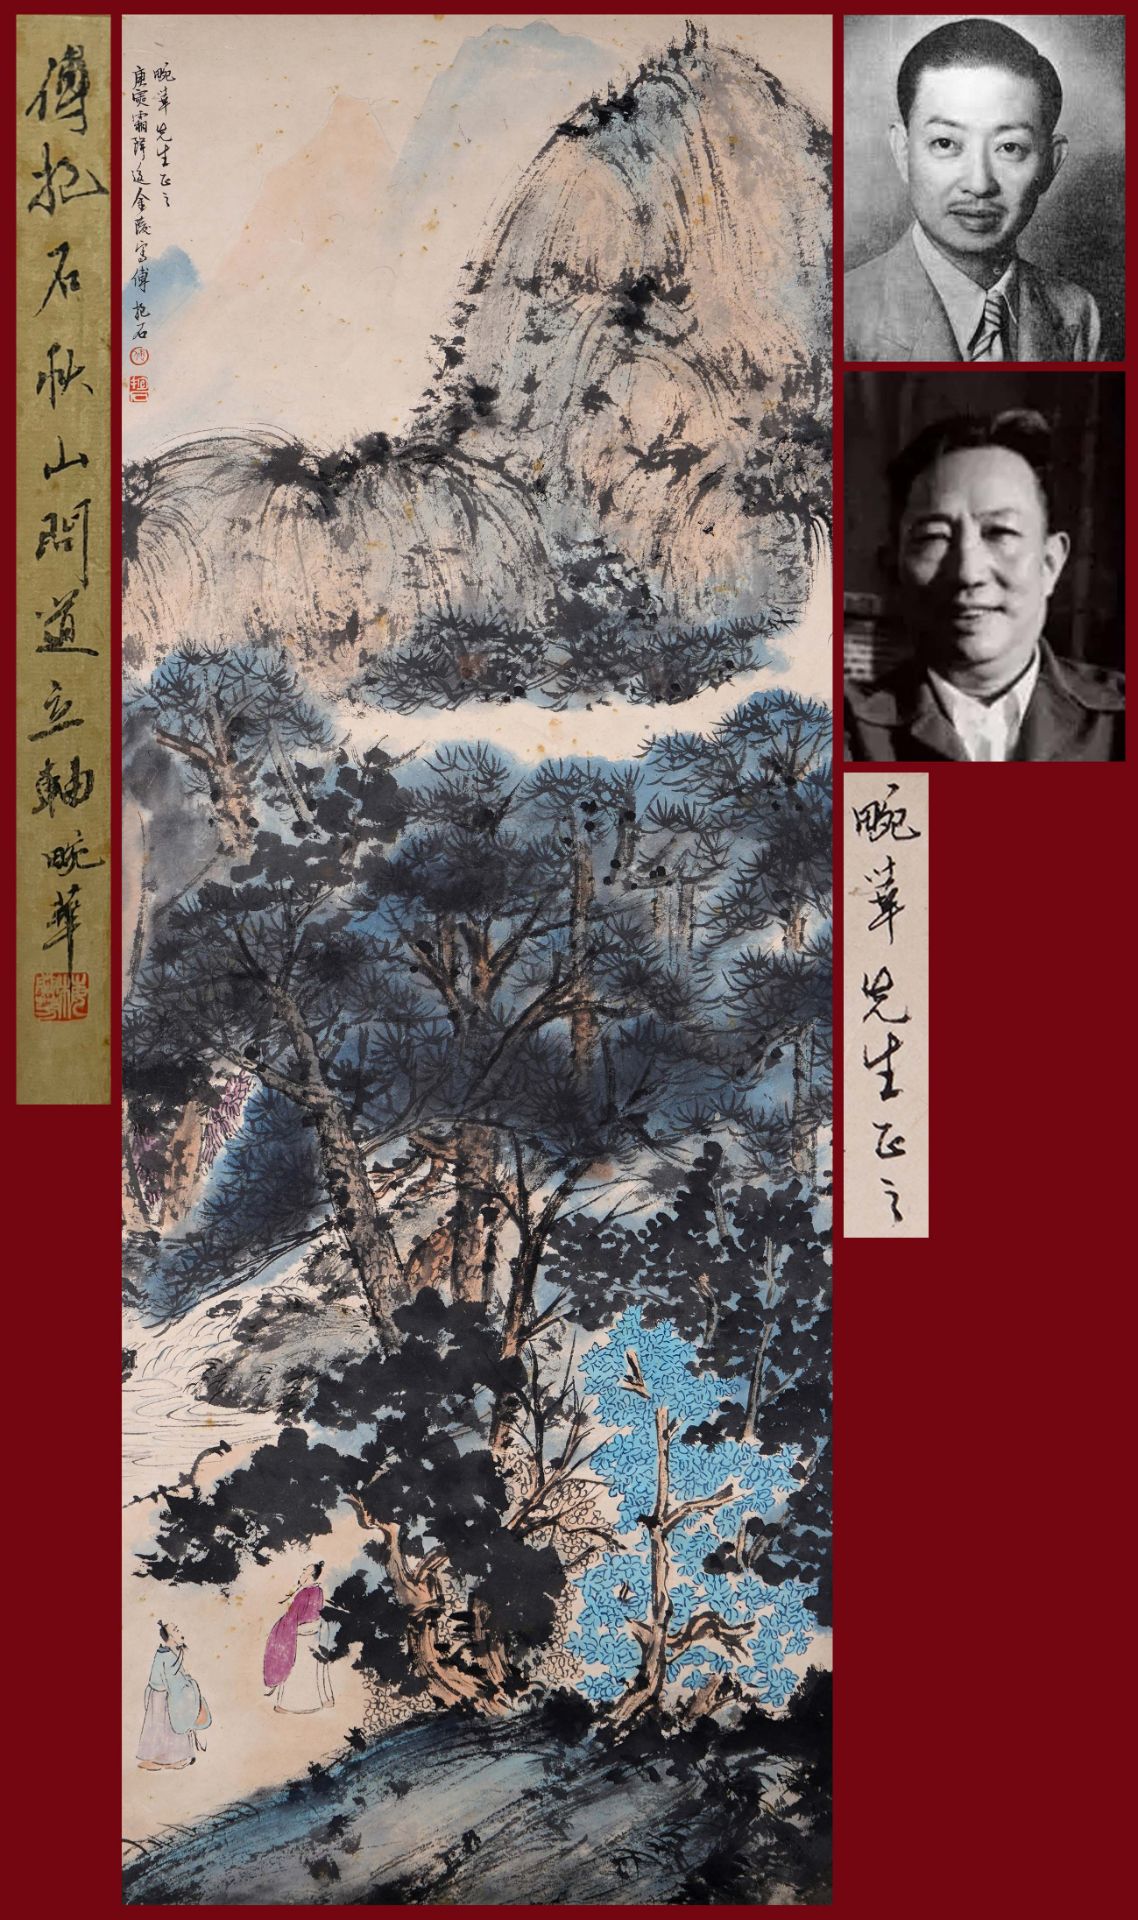 A Chinese Scroll Painting Signed Fu Baoshi